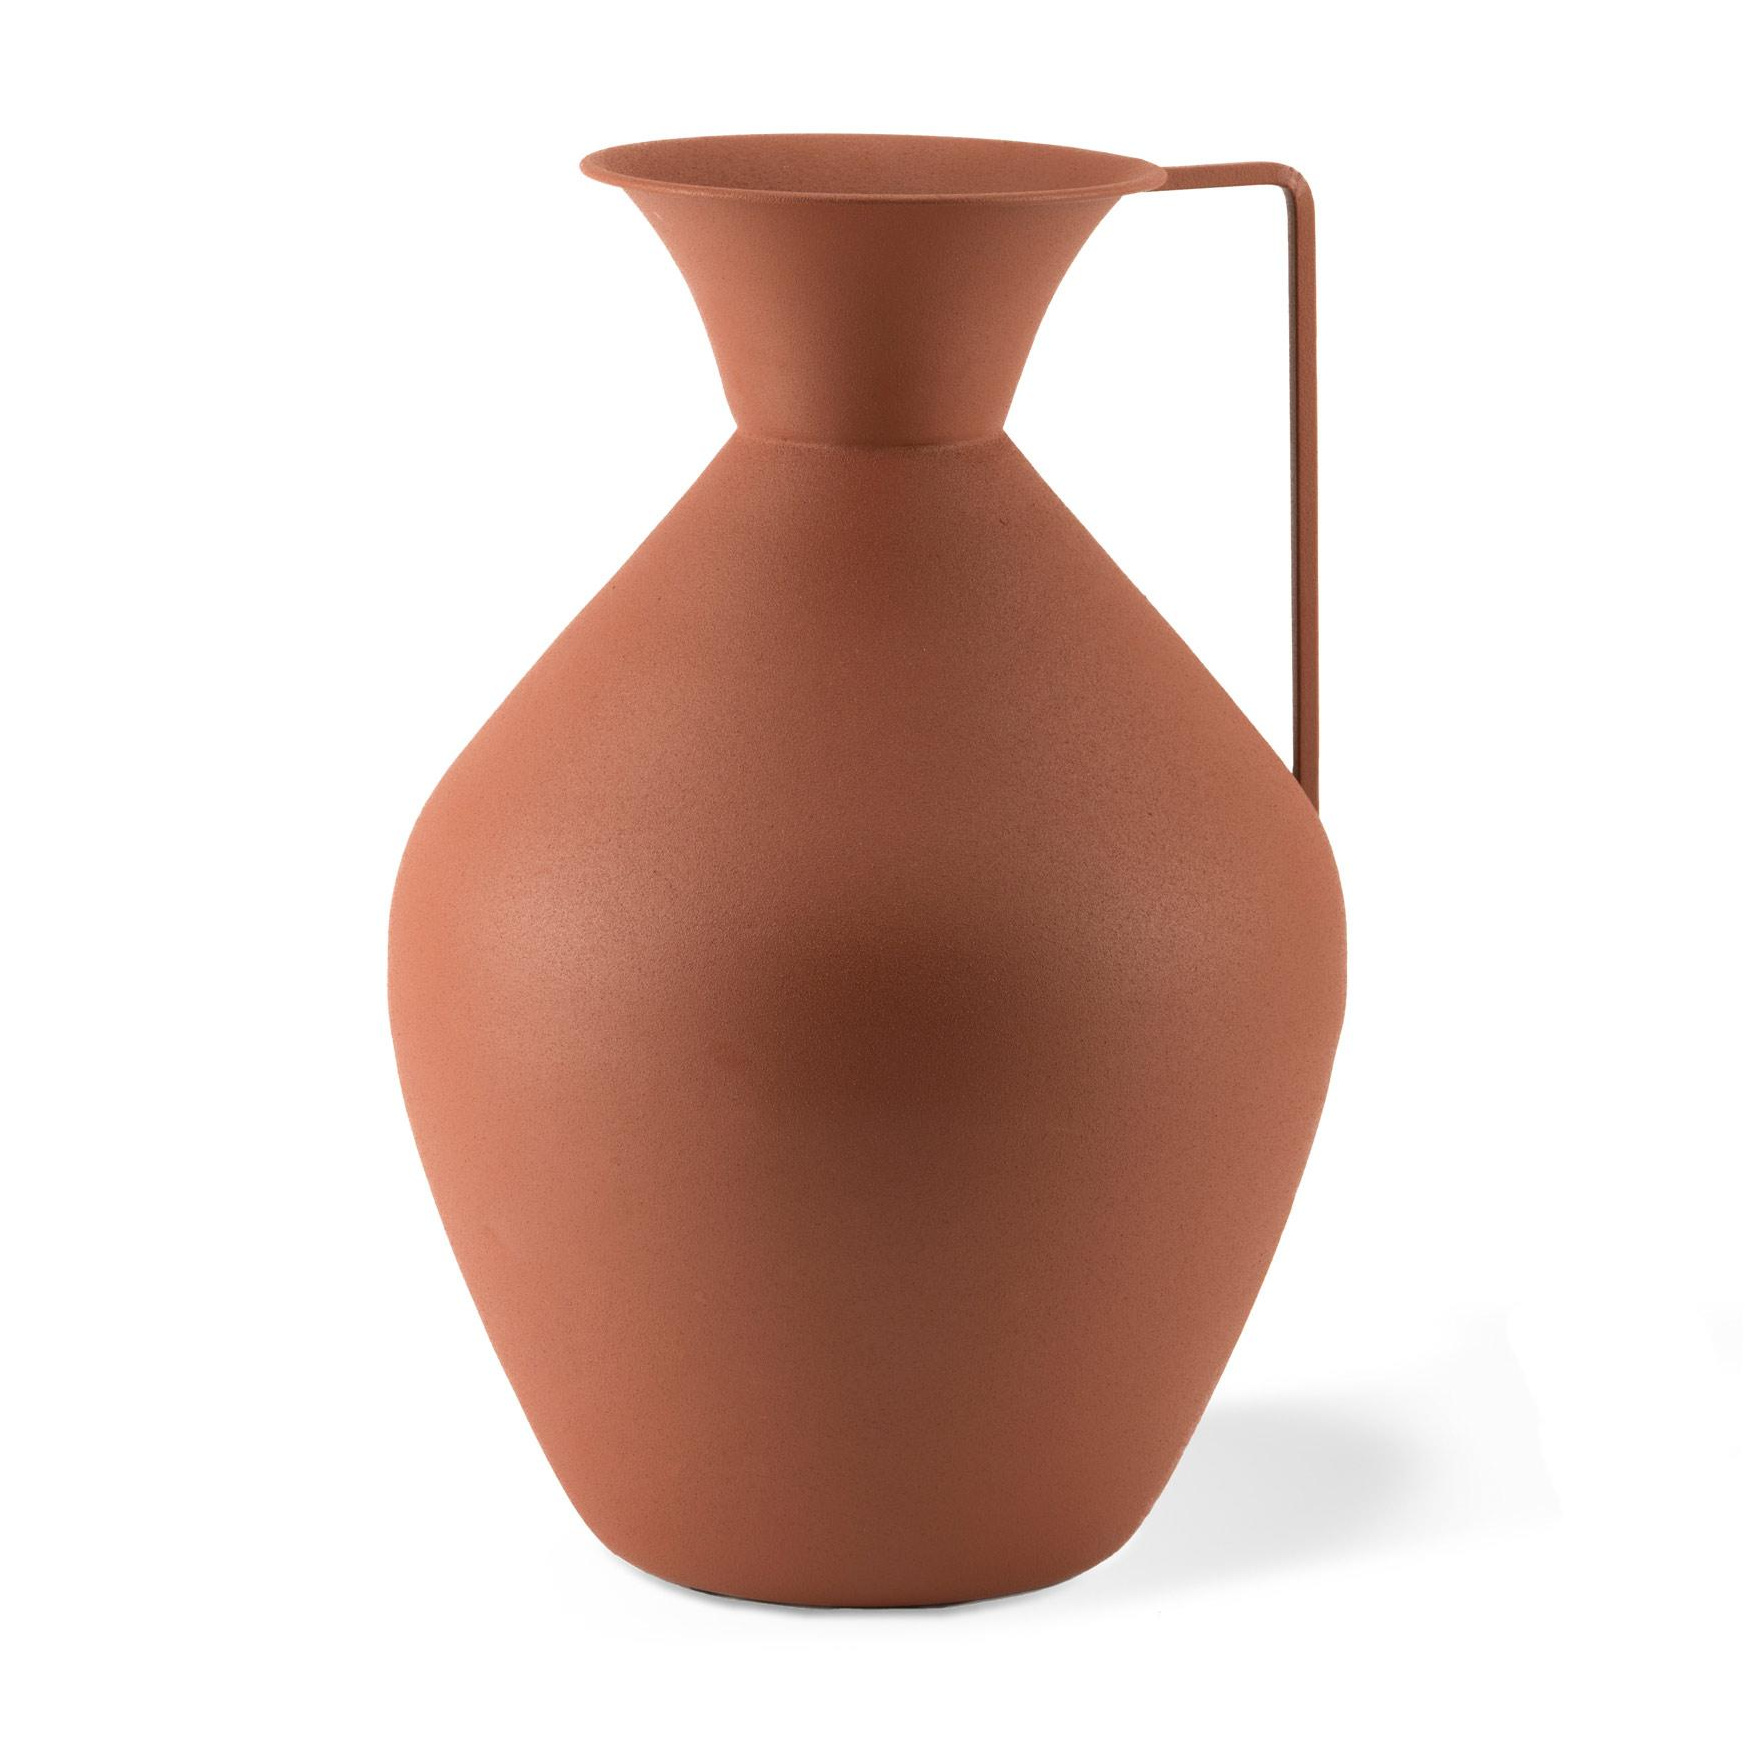 pols potten - Roman Vase 3er Set - braun/matt von pols potten